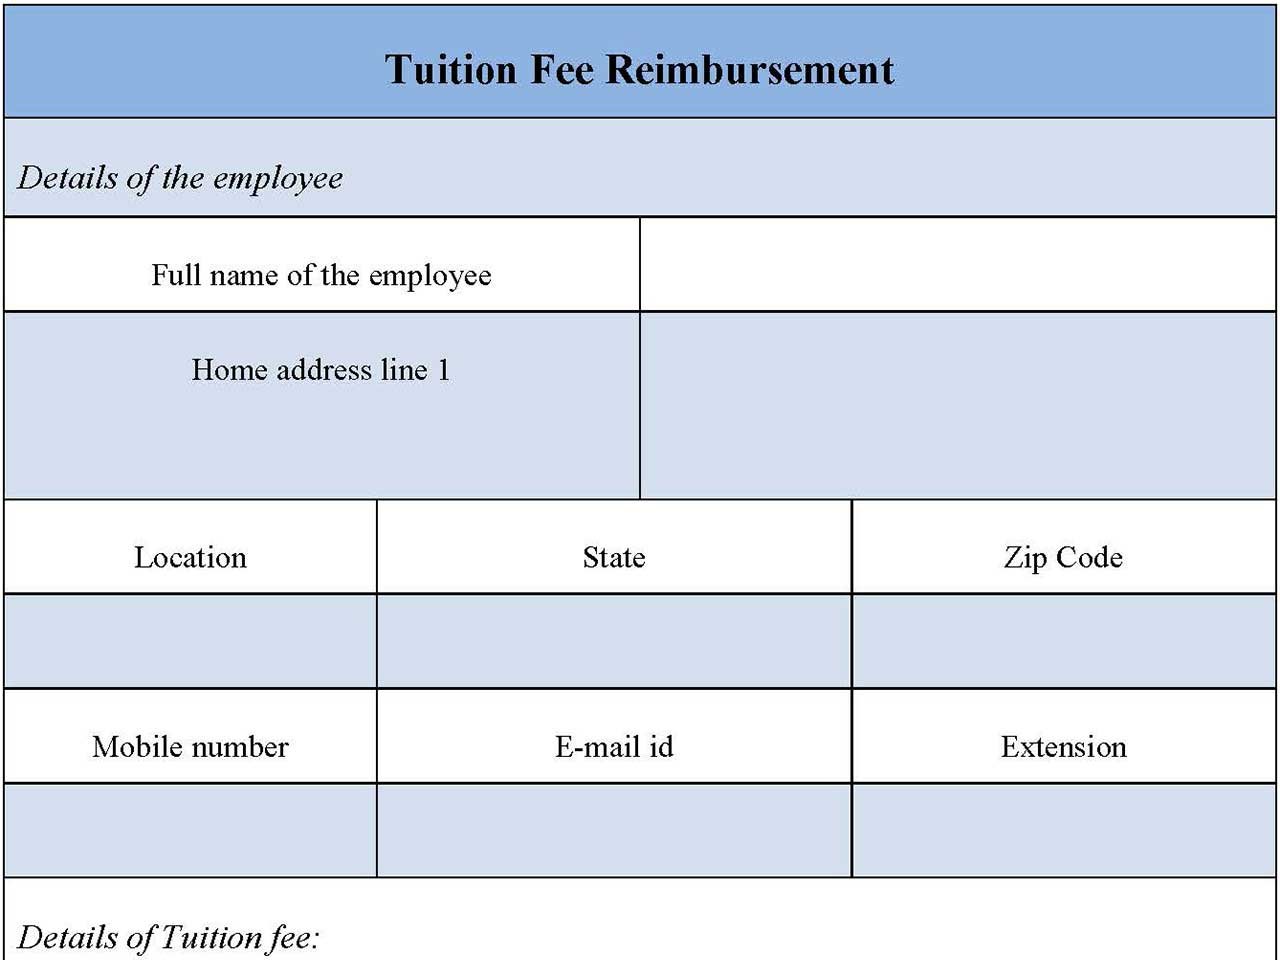 Tuition fee Reimbursement Form